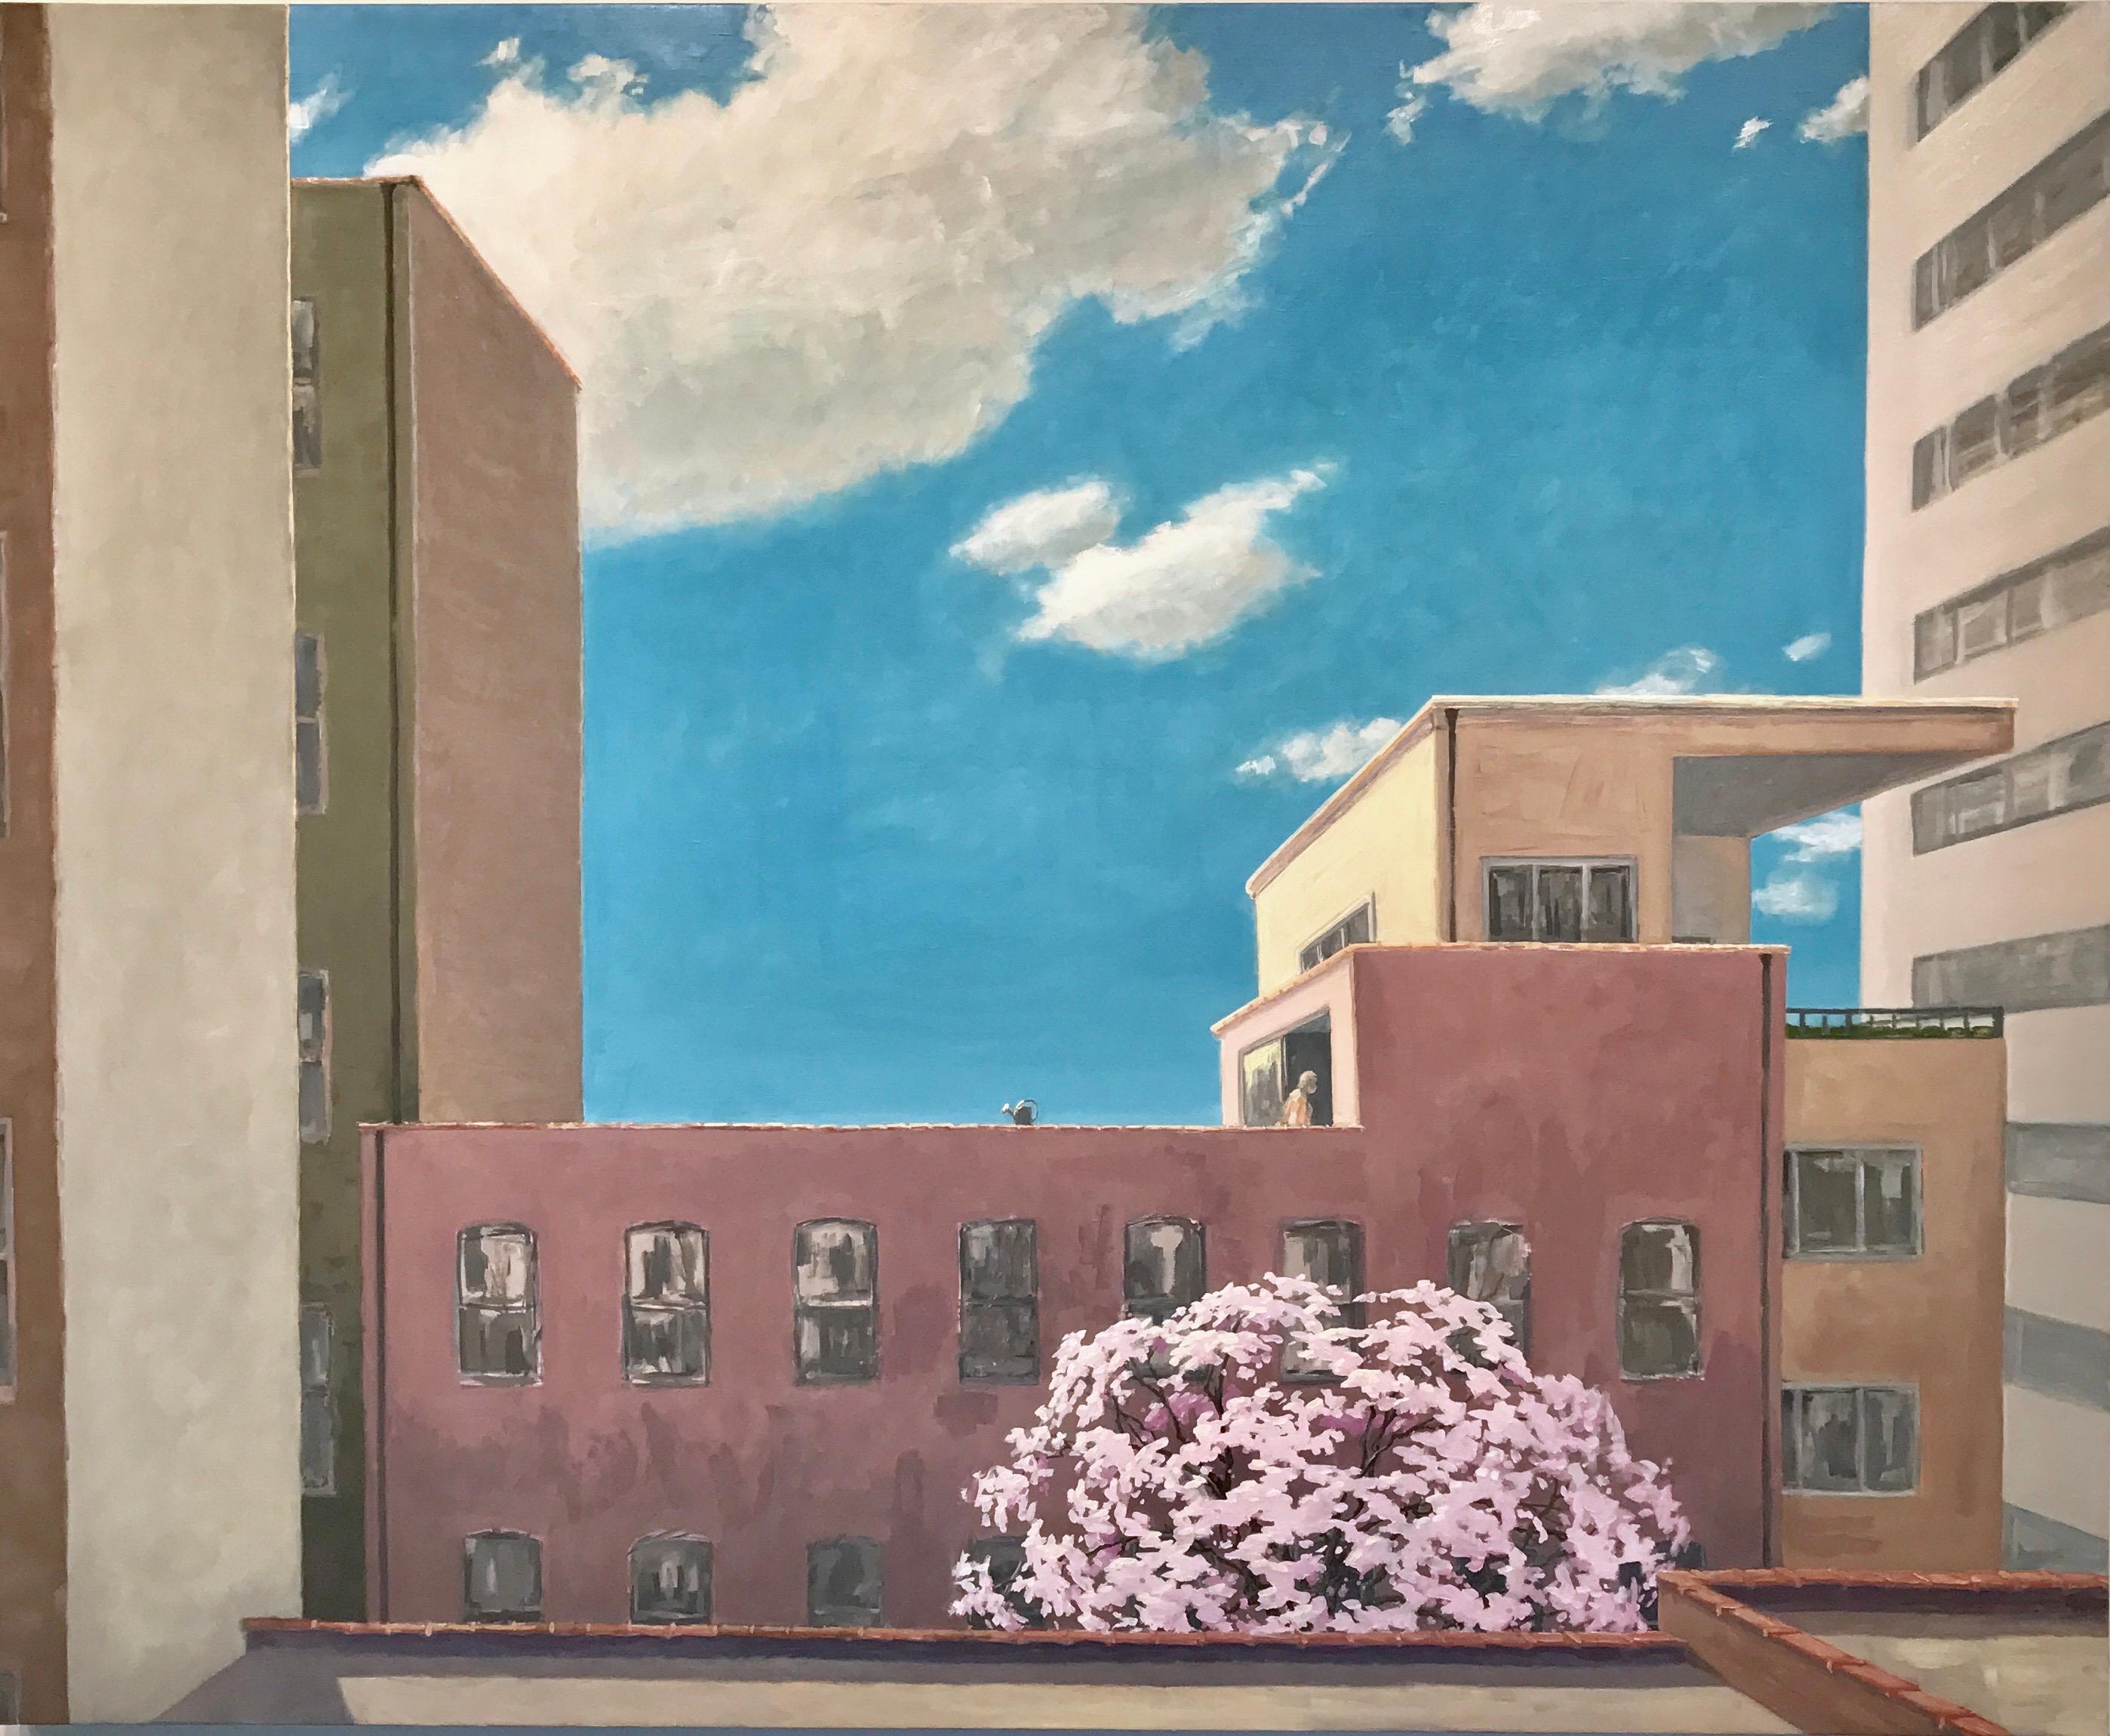 KK Kozik Landscape Painting - Spring in the City, Cherry Blossoms, Buildings, Blue Sky Urban Landscape